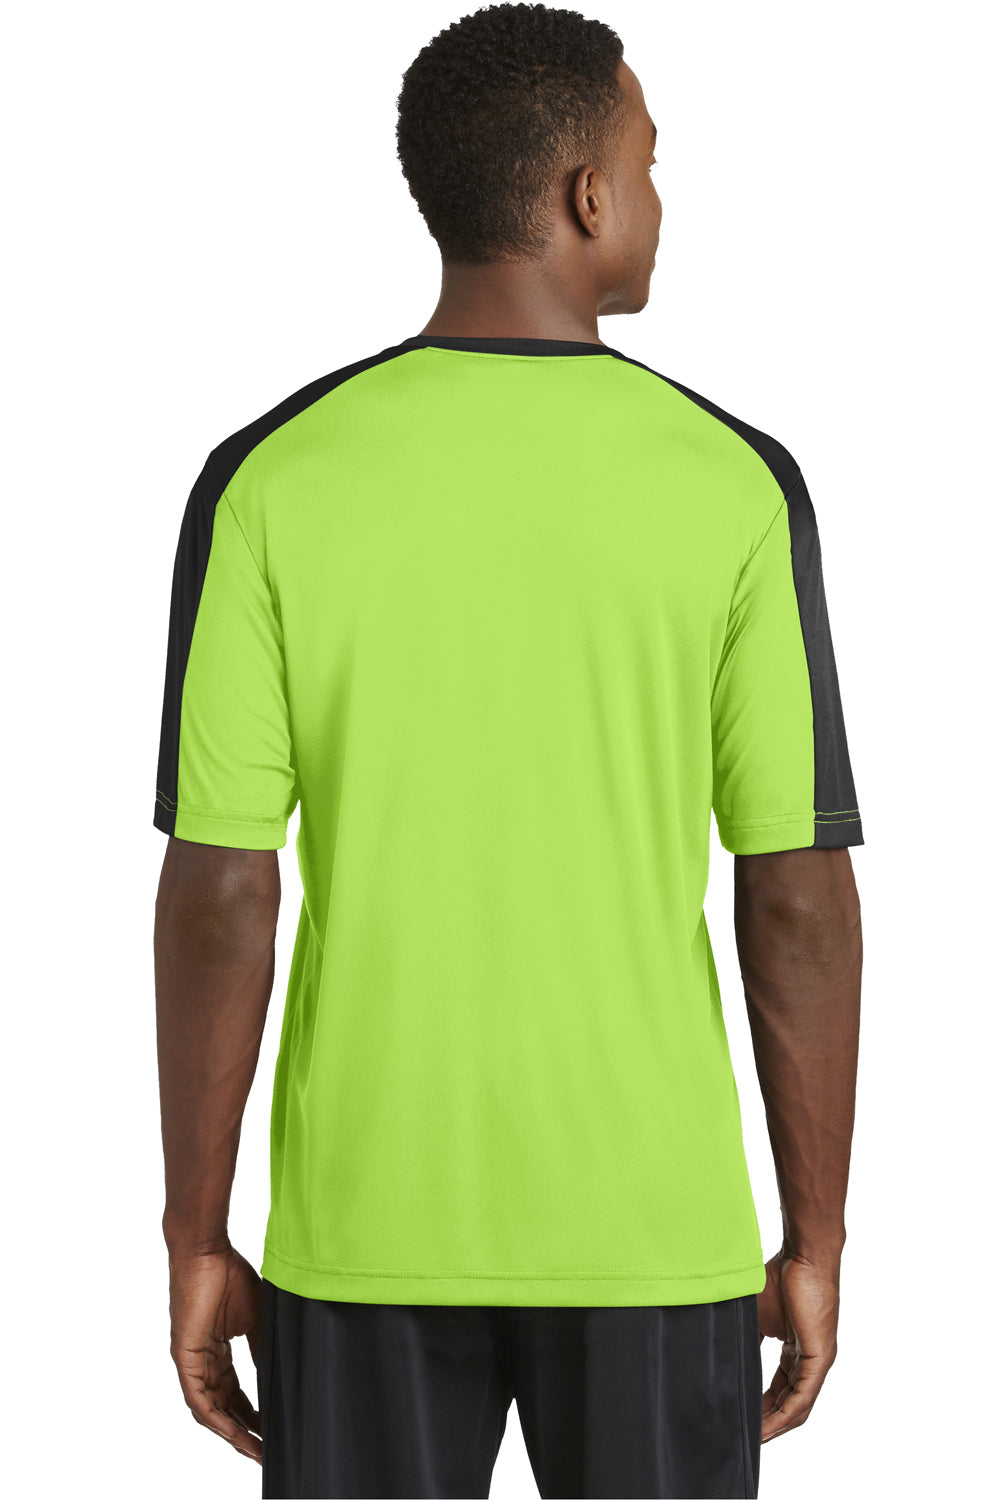 Sport-Tek ST354 Mens Competitor Moisture Wicking Short Sleeve Crewneck T-Shirt Lime Green/Black Back